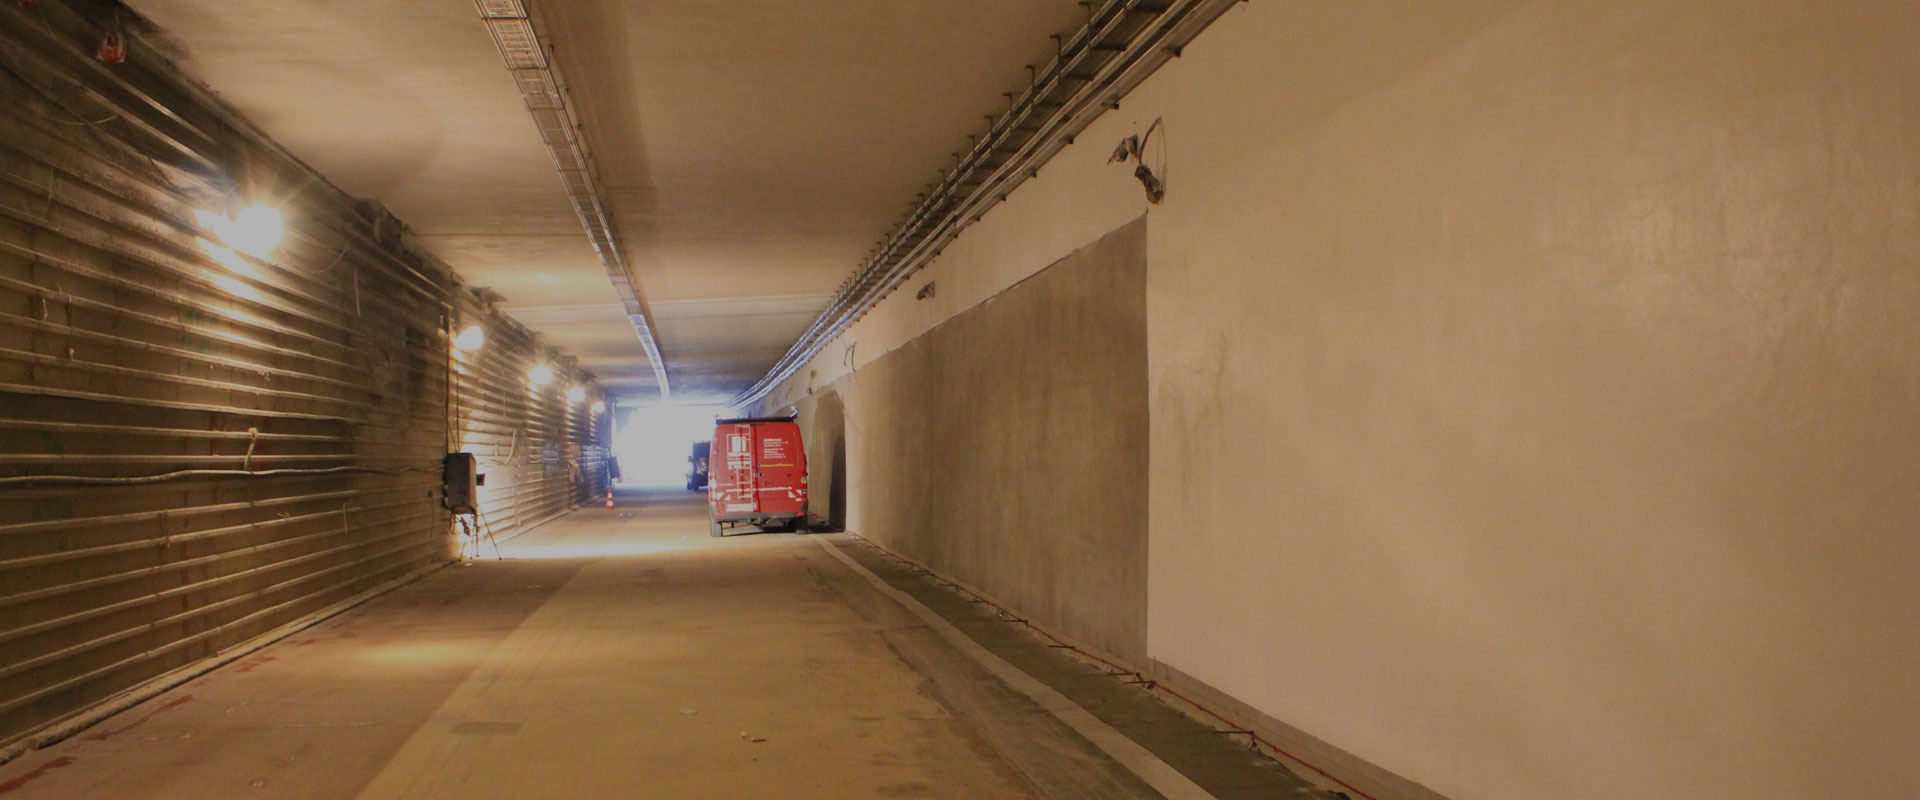 Konstruktiver Brandschutz im Autobahntunnel in Köln-Kalkar